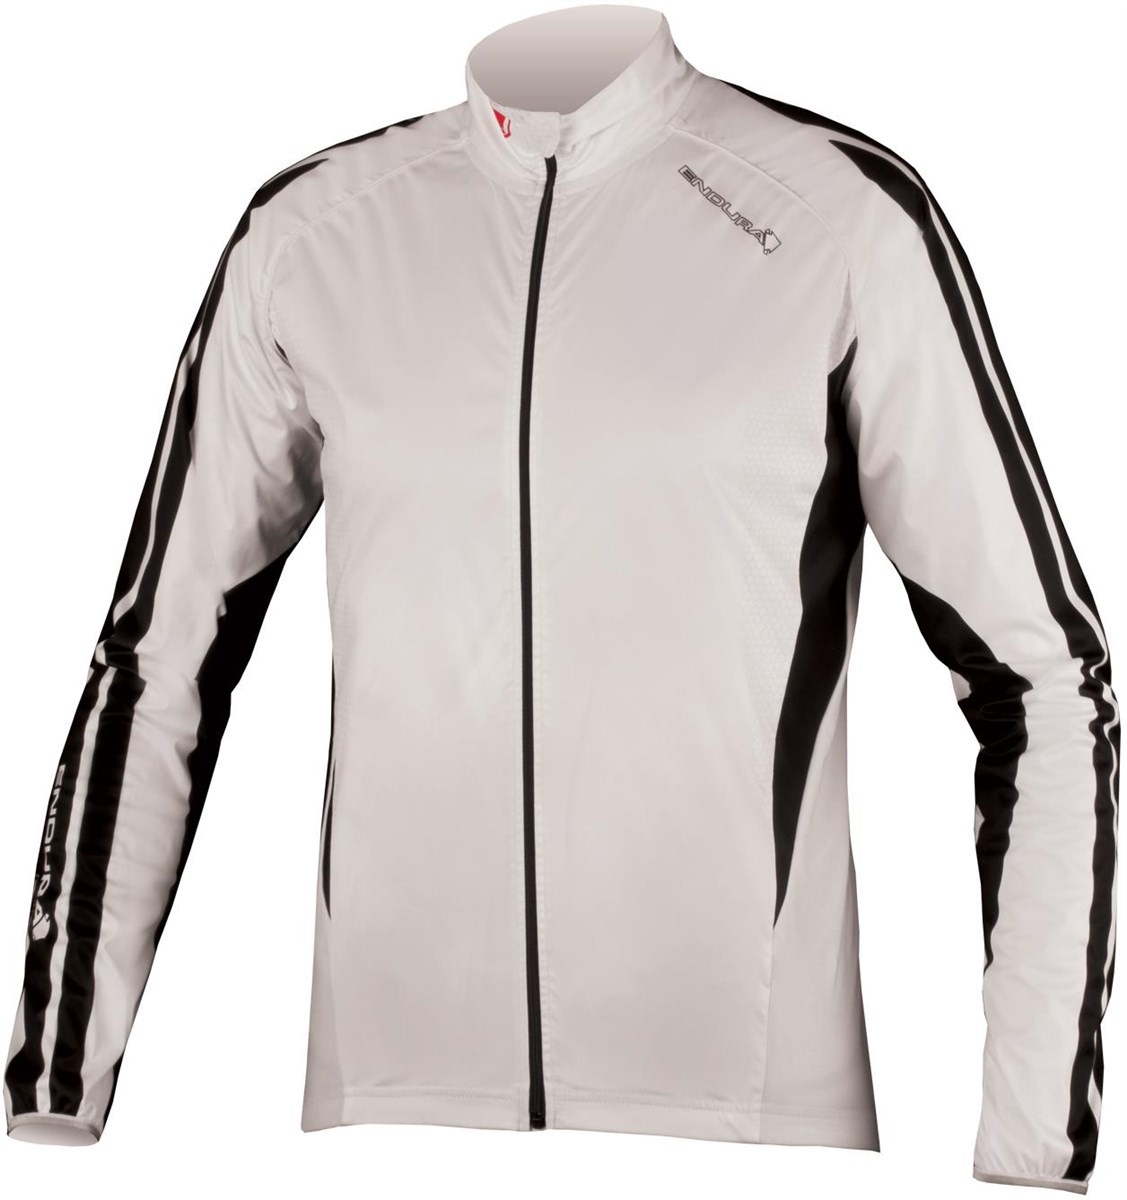 Endura Jetstream III Long Sleeve Cycling Jersey SS16